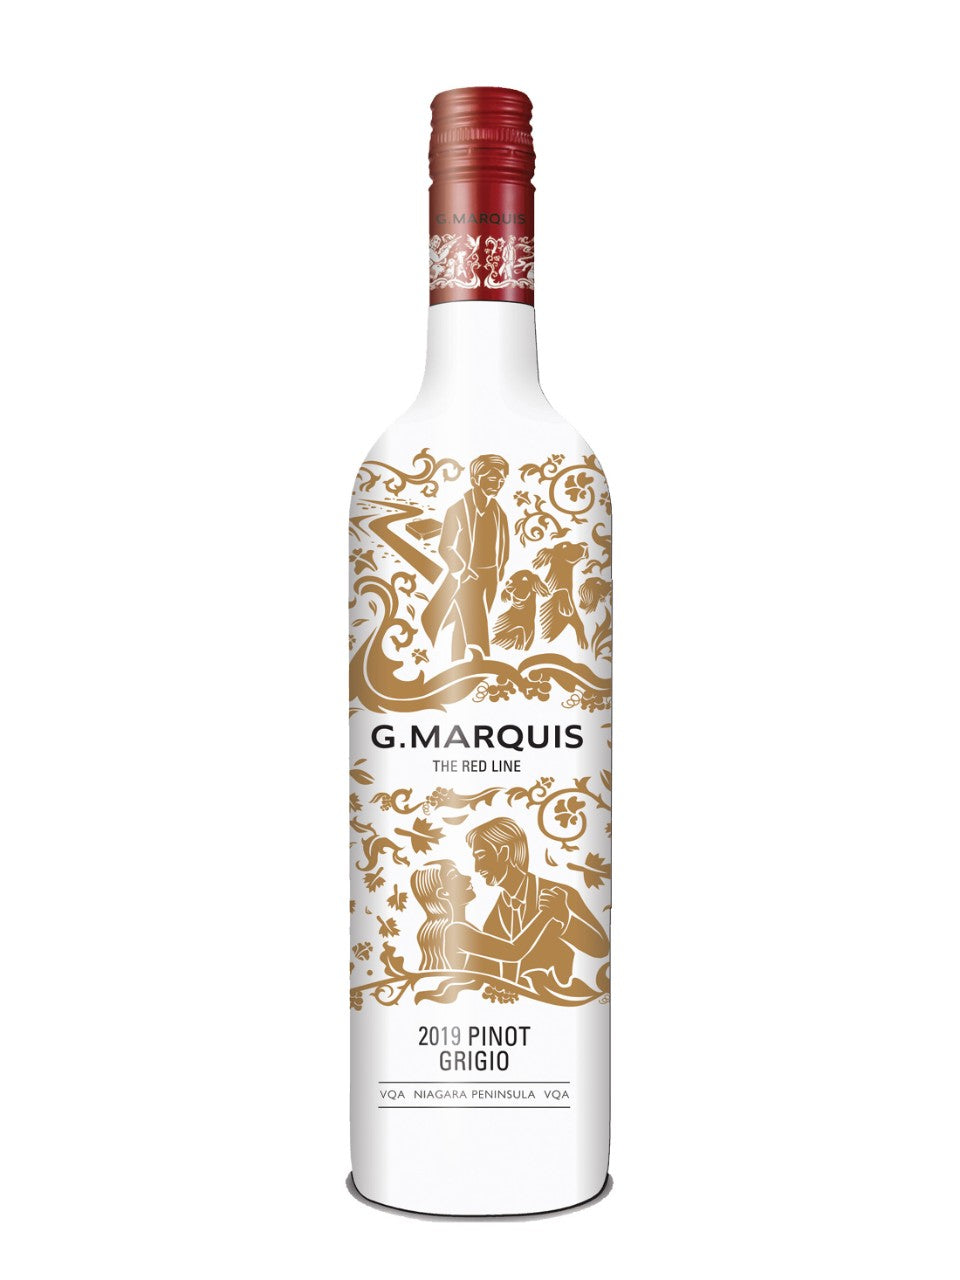 G. Marquis The Red Line Pinot Grigio VQA 750 mL bottle